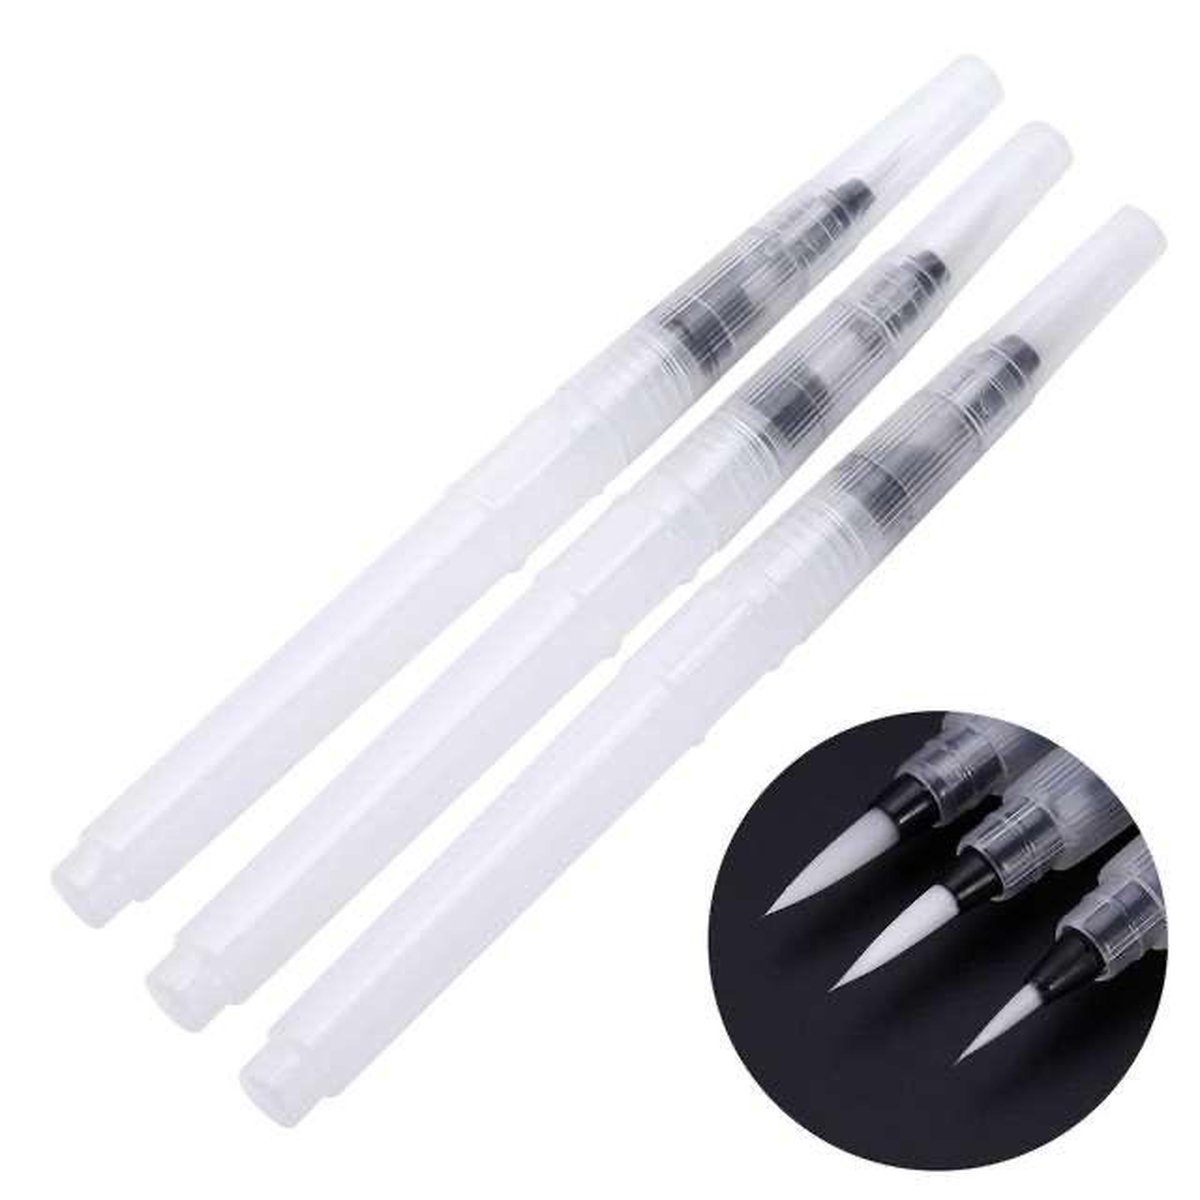 Waterverf penselen – Water brush pen – Set van 3 – Hervulbare penselen